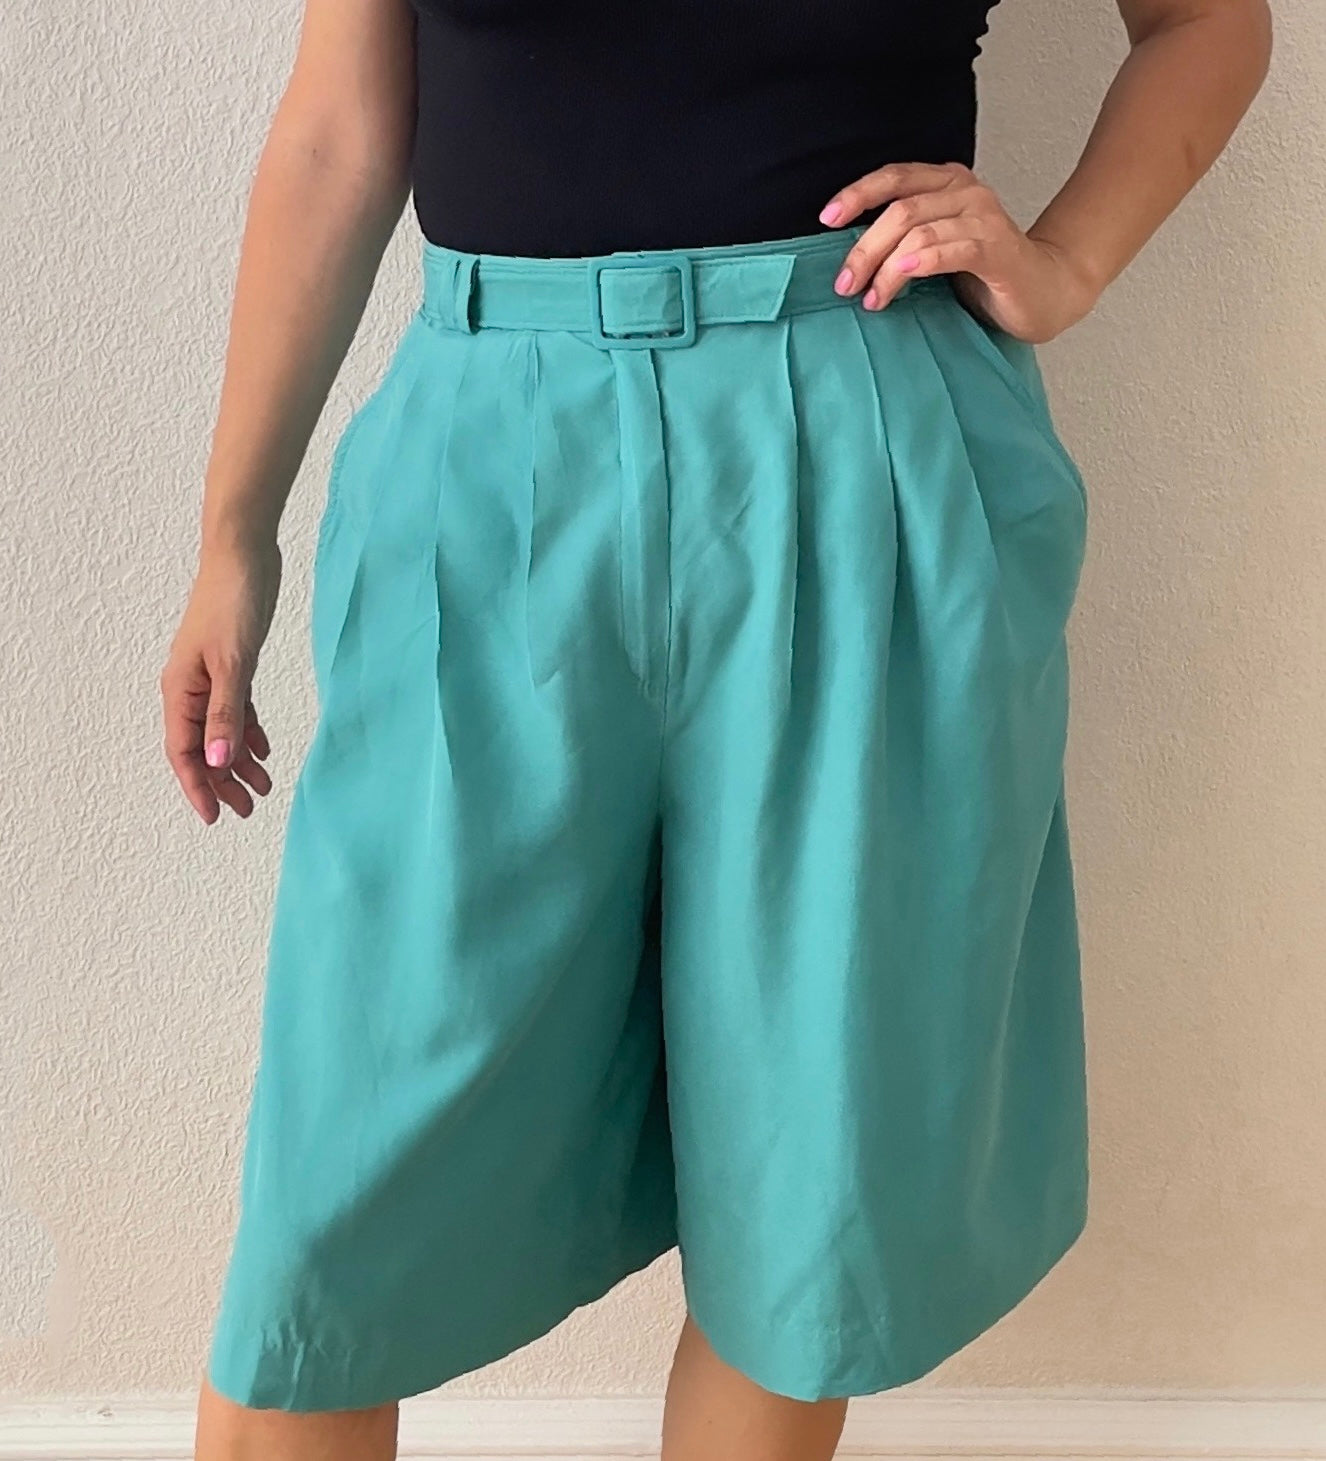 Vintage Silk Bermuda Shorts - Ted Nicol